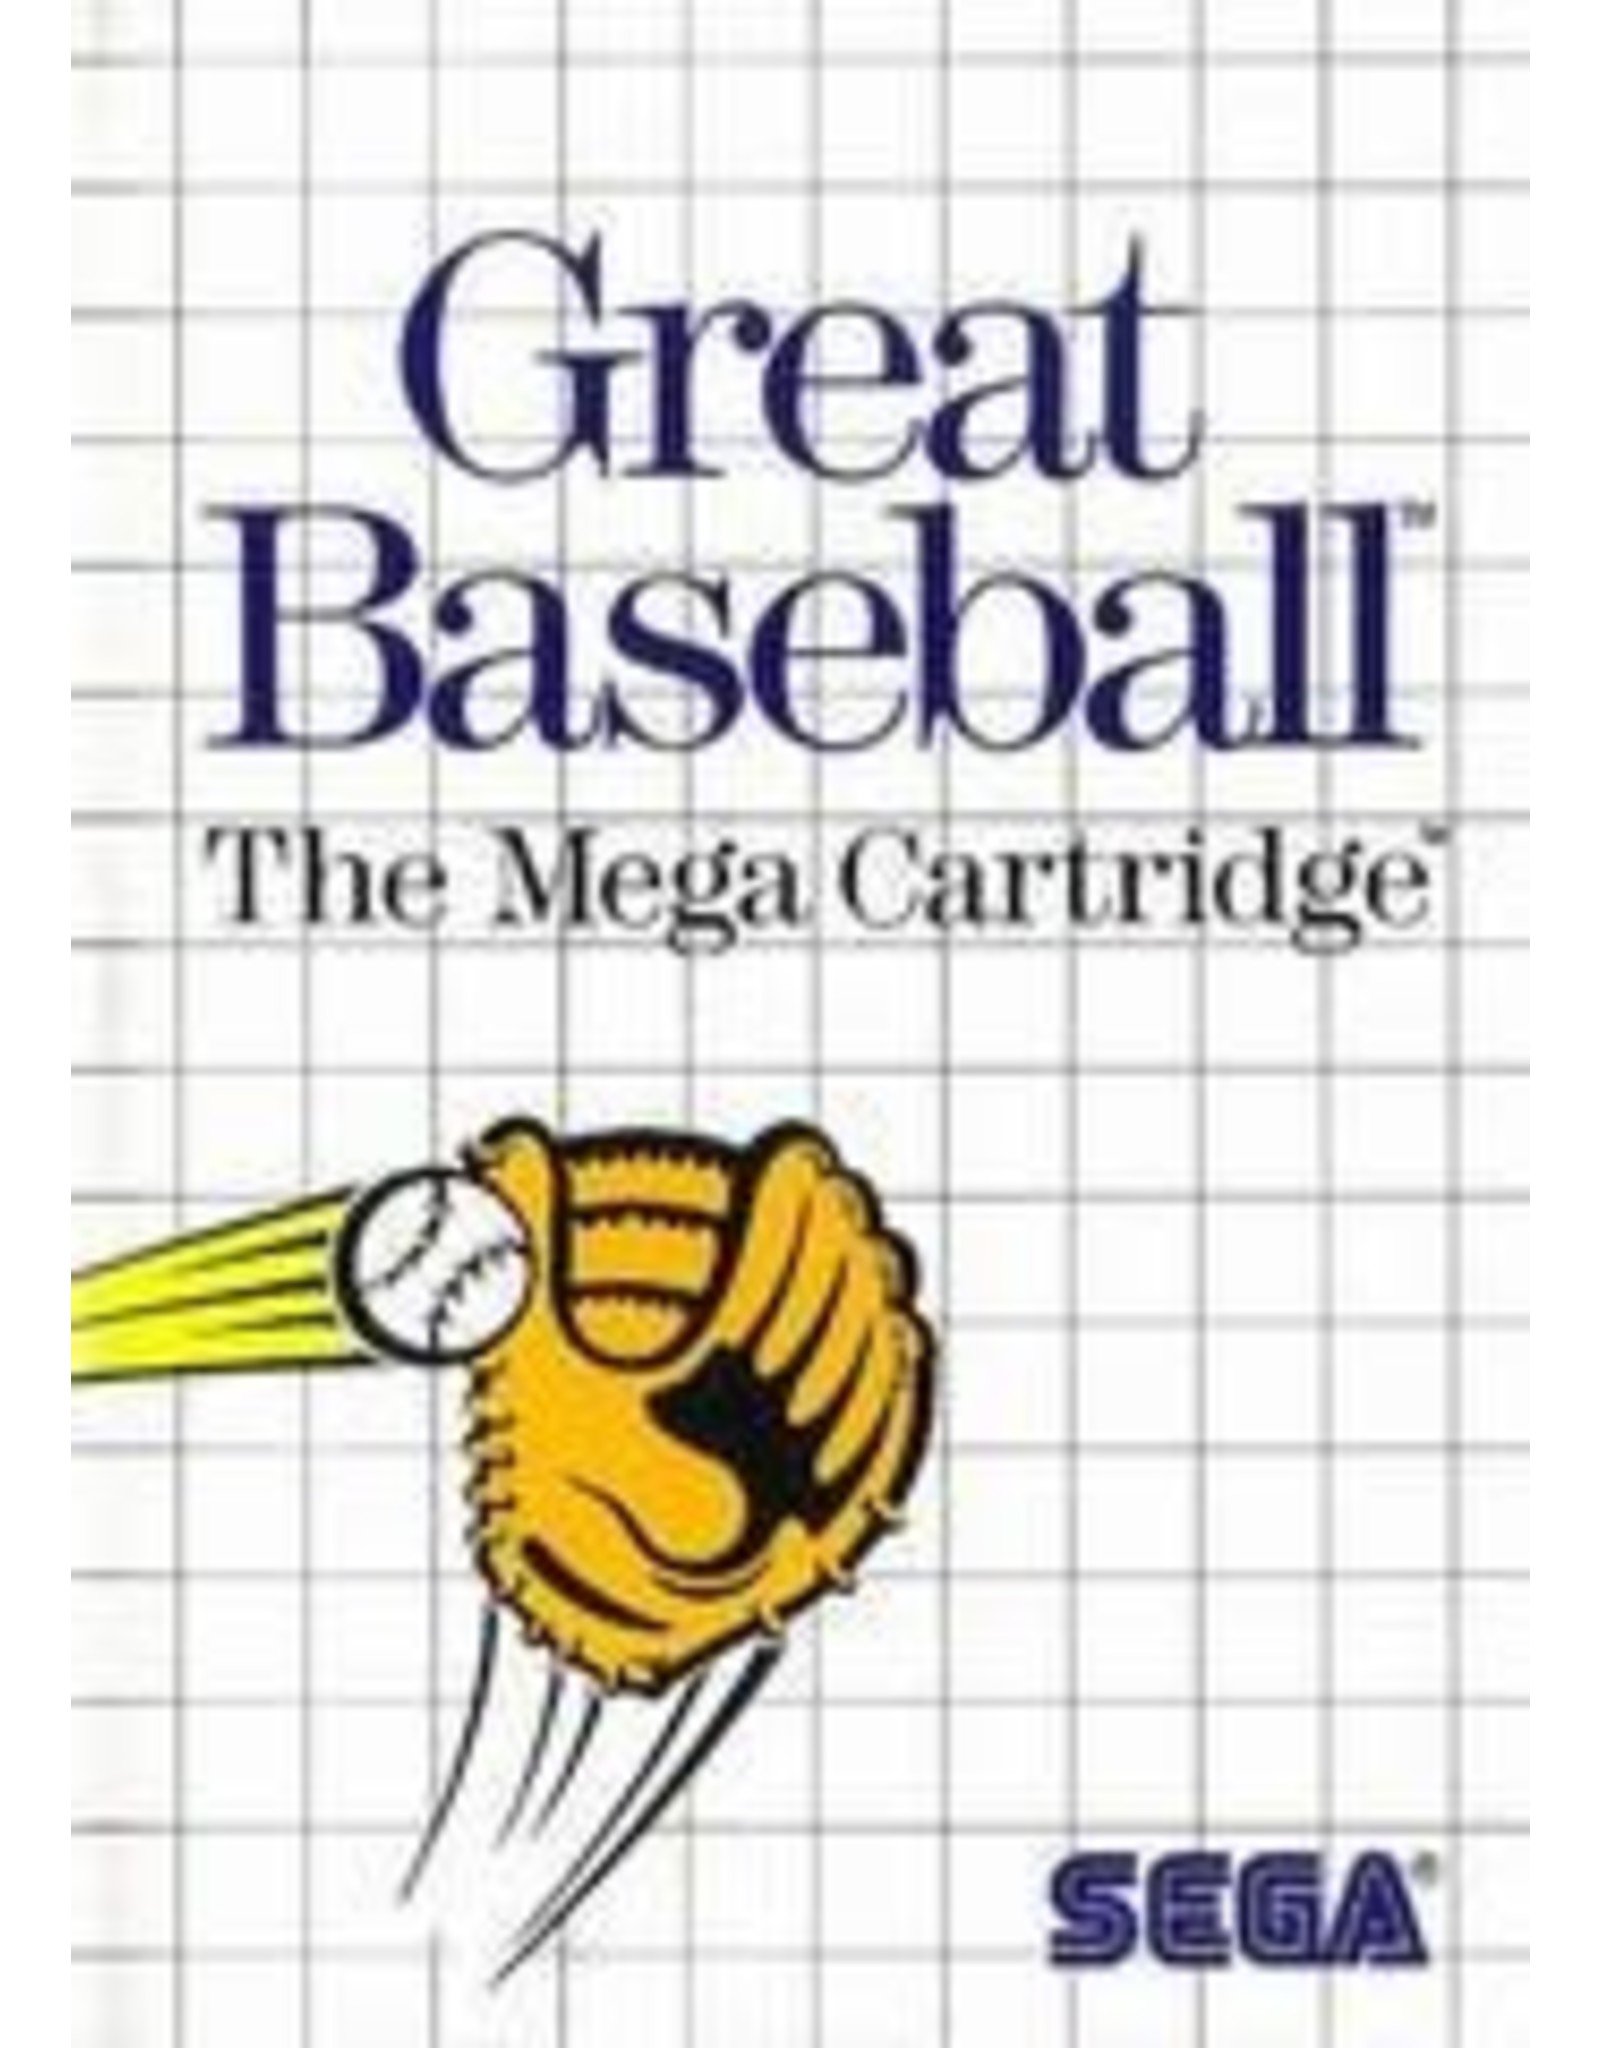 Sega Master System Great Baseball (Cart Only, Damaged Label)